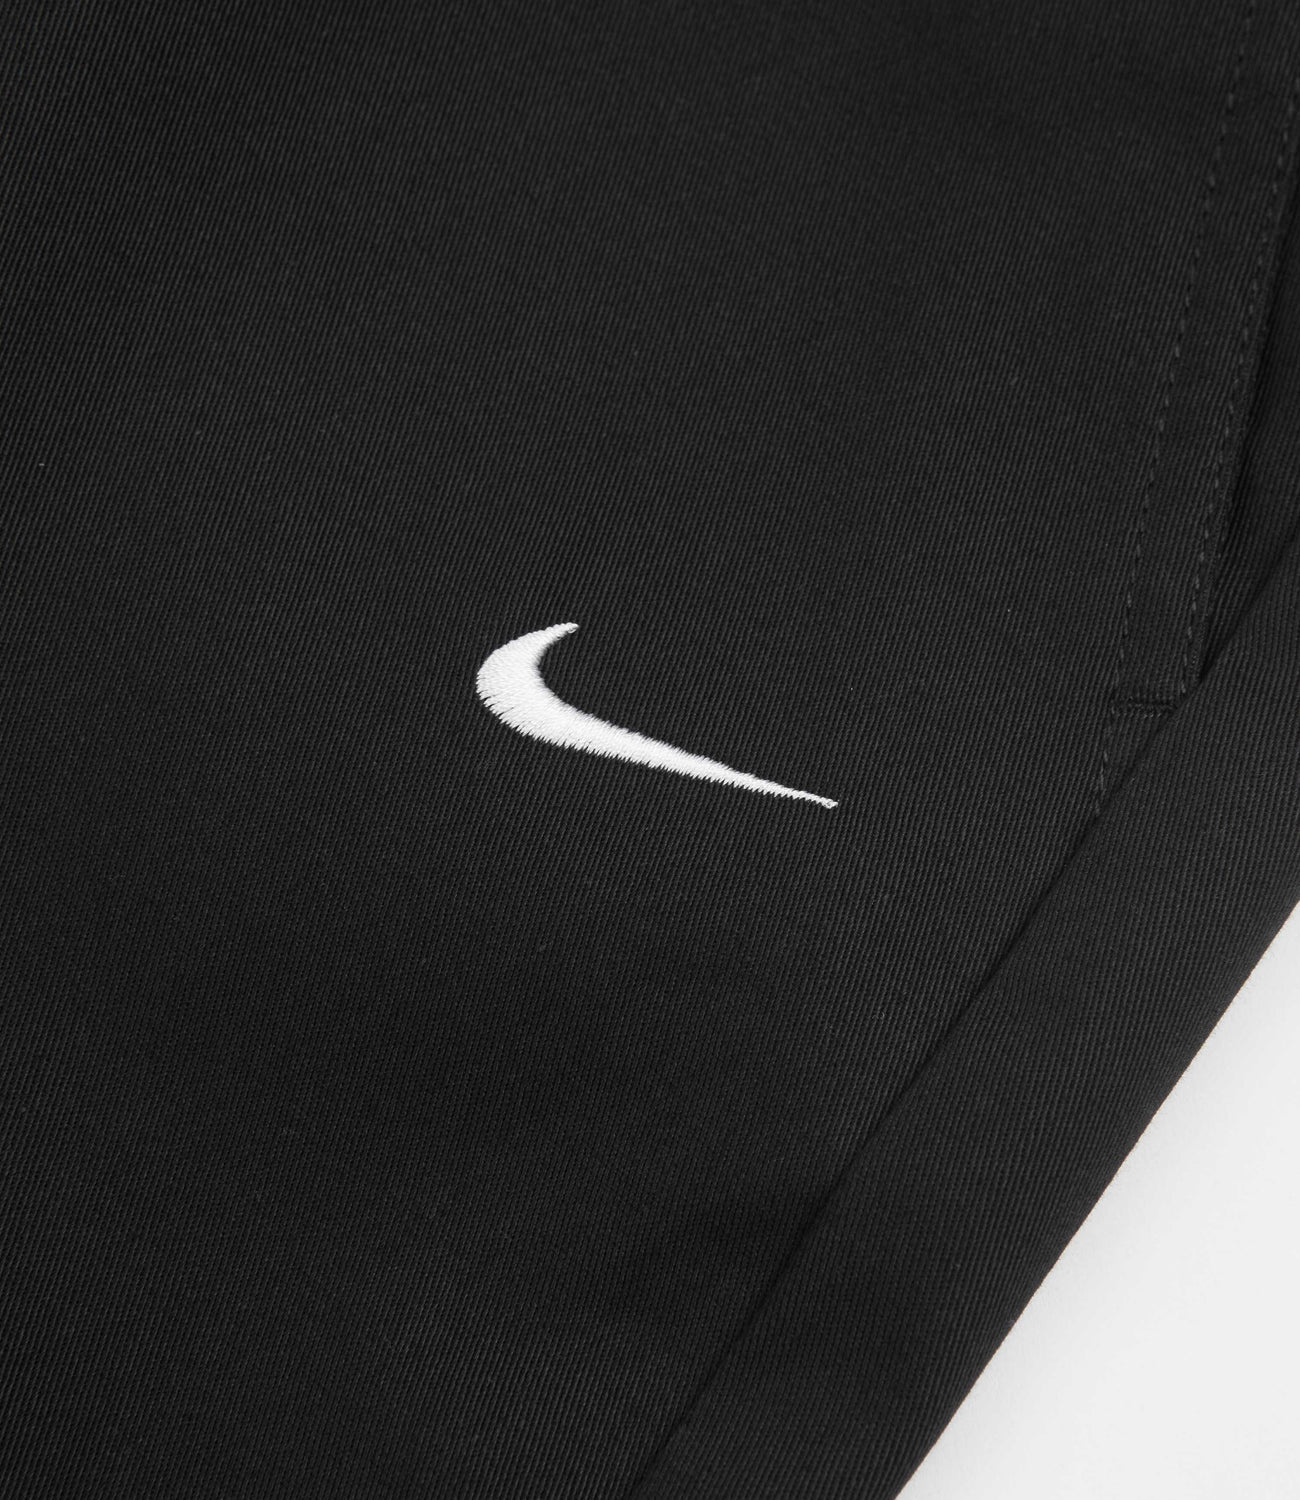 Nike Unlined Chino Pants - Black / White | Flatspot